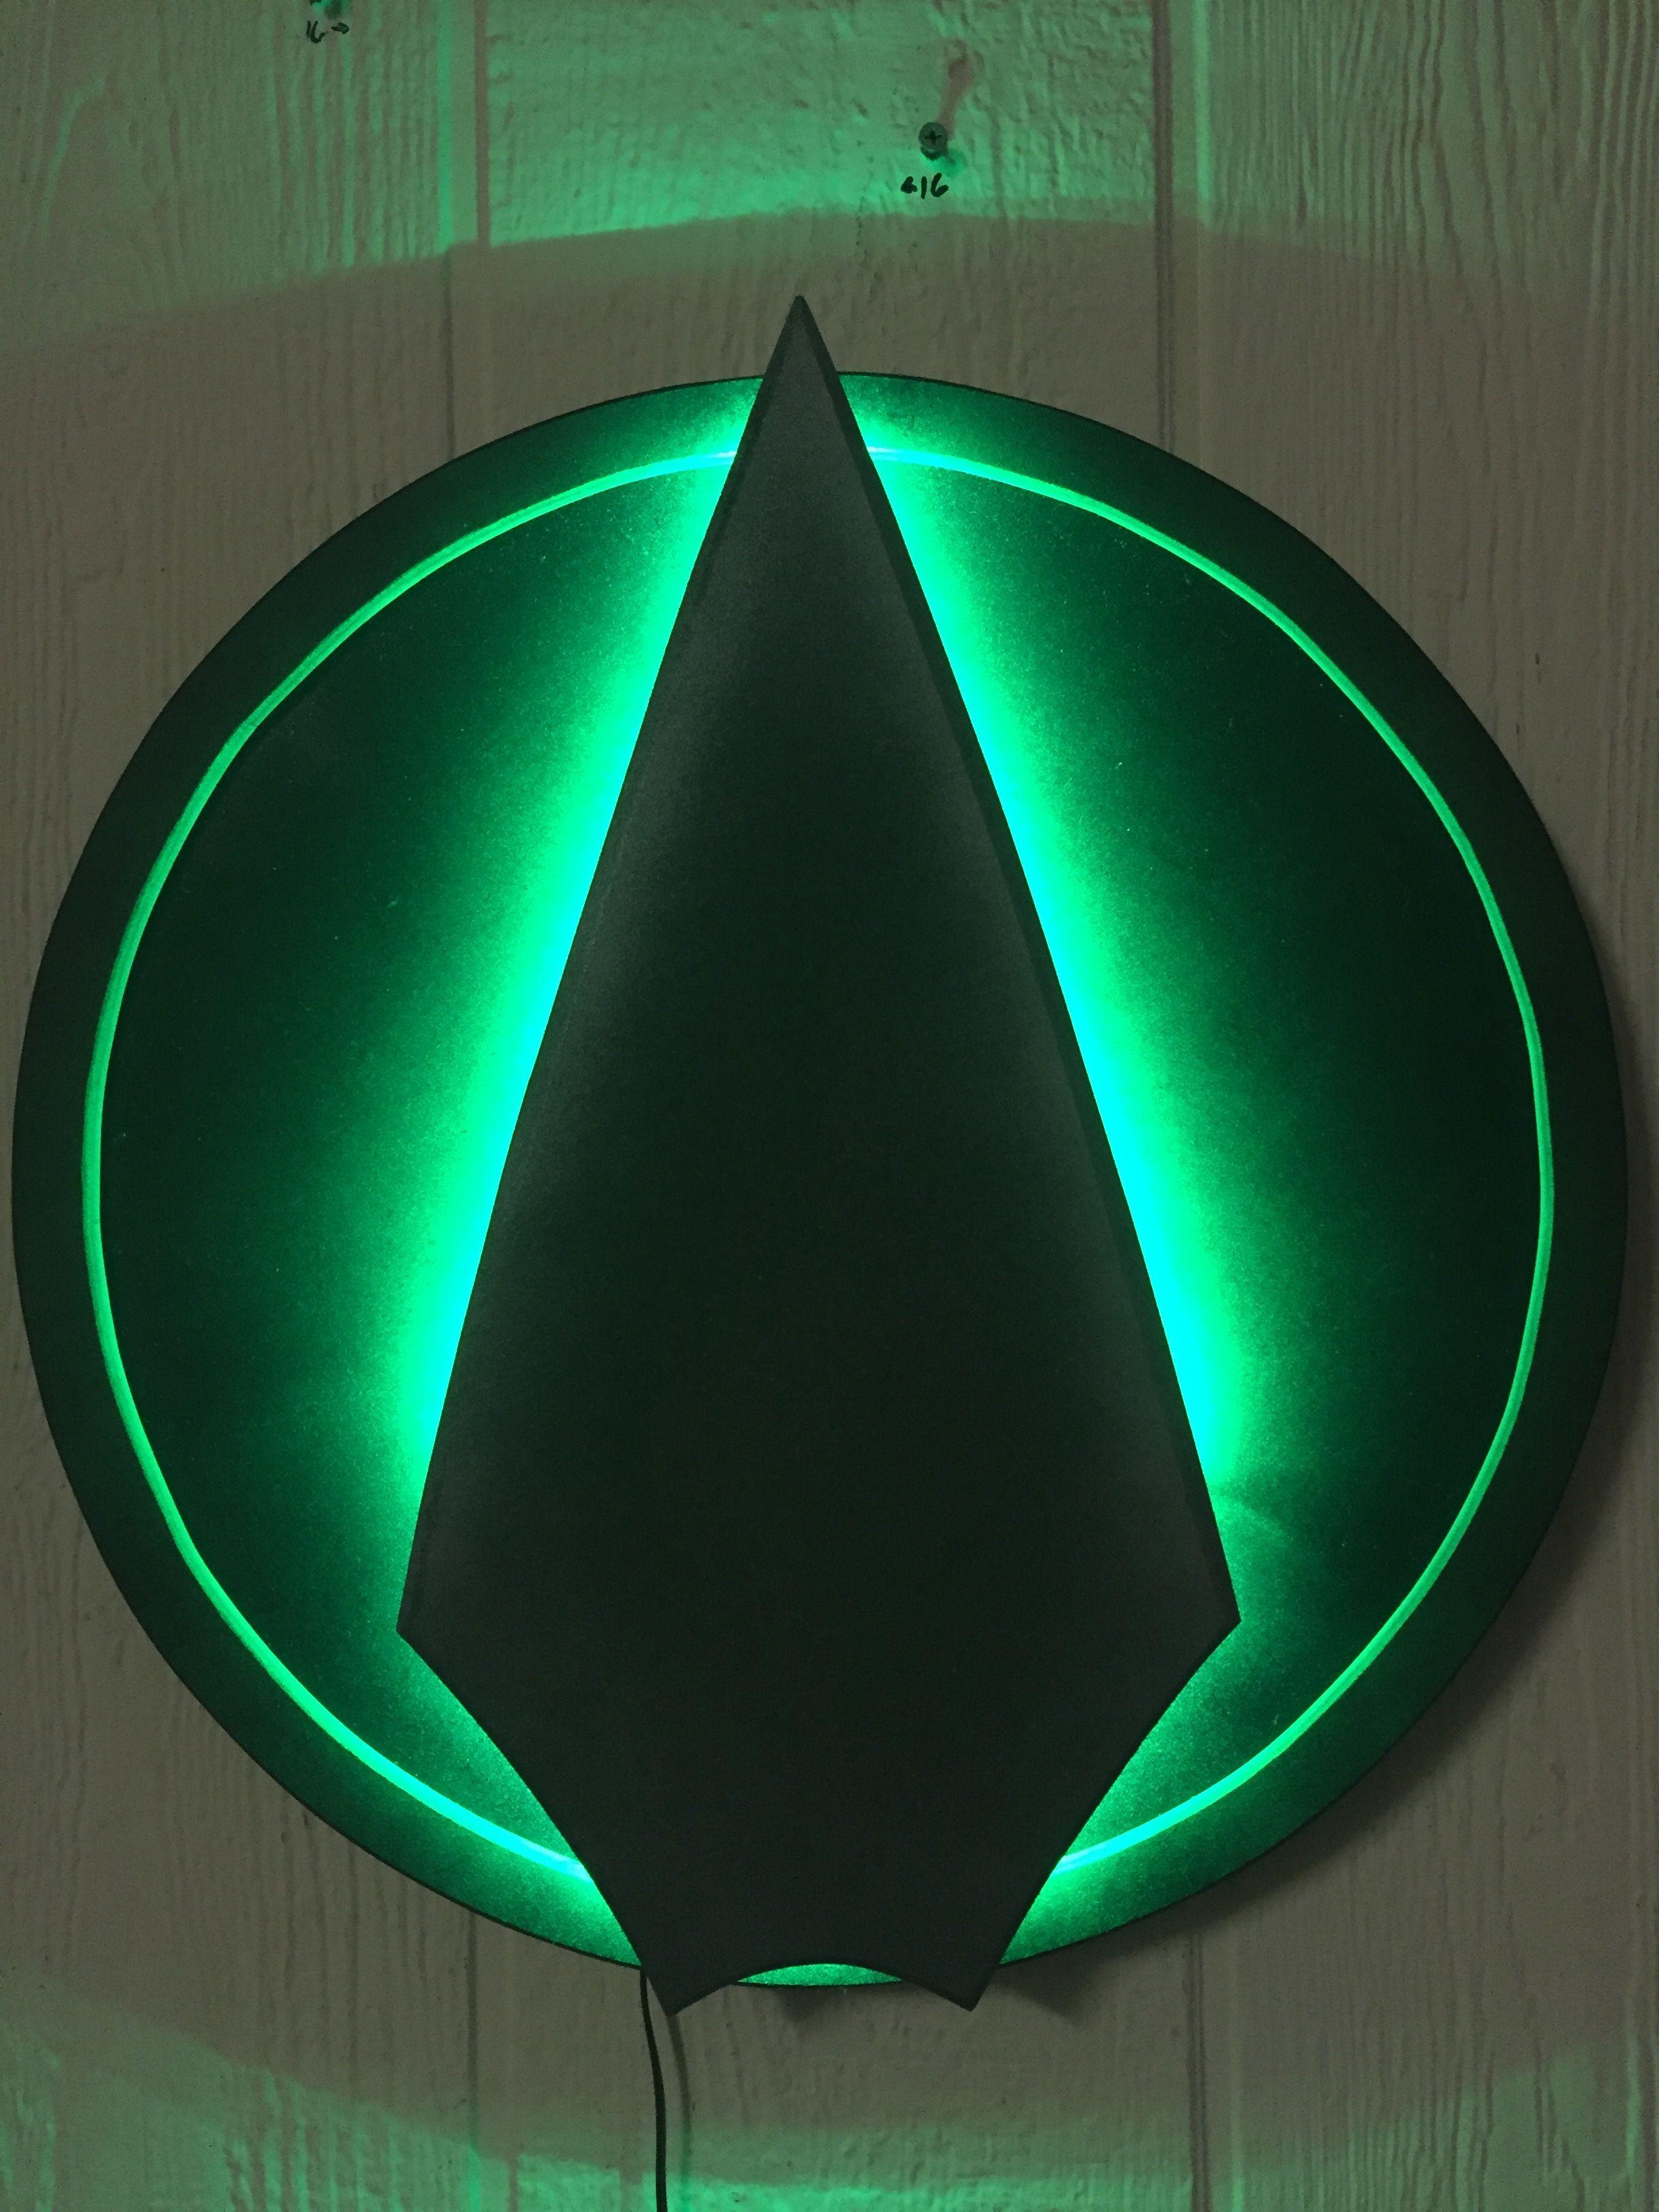 Grren Arrow Logo - Green Arrow Logo Illuminated Wall Display | Home decor | Pinterest ...